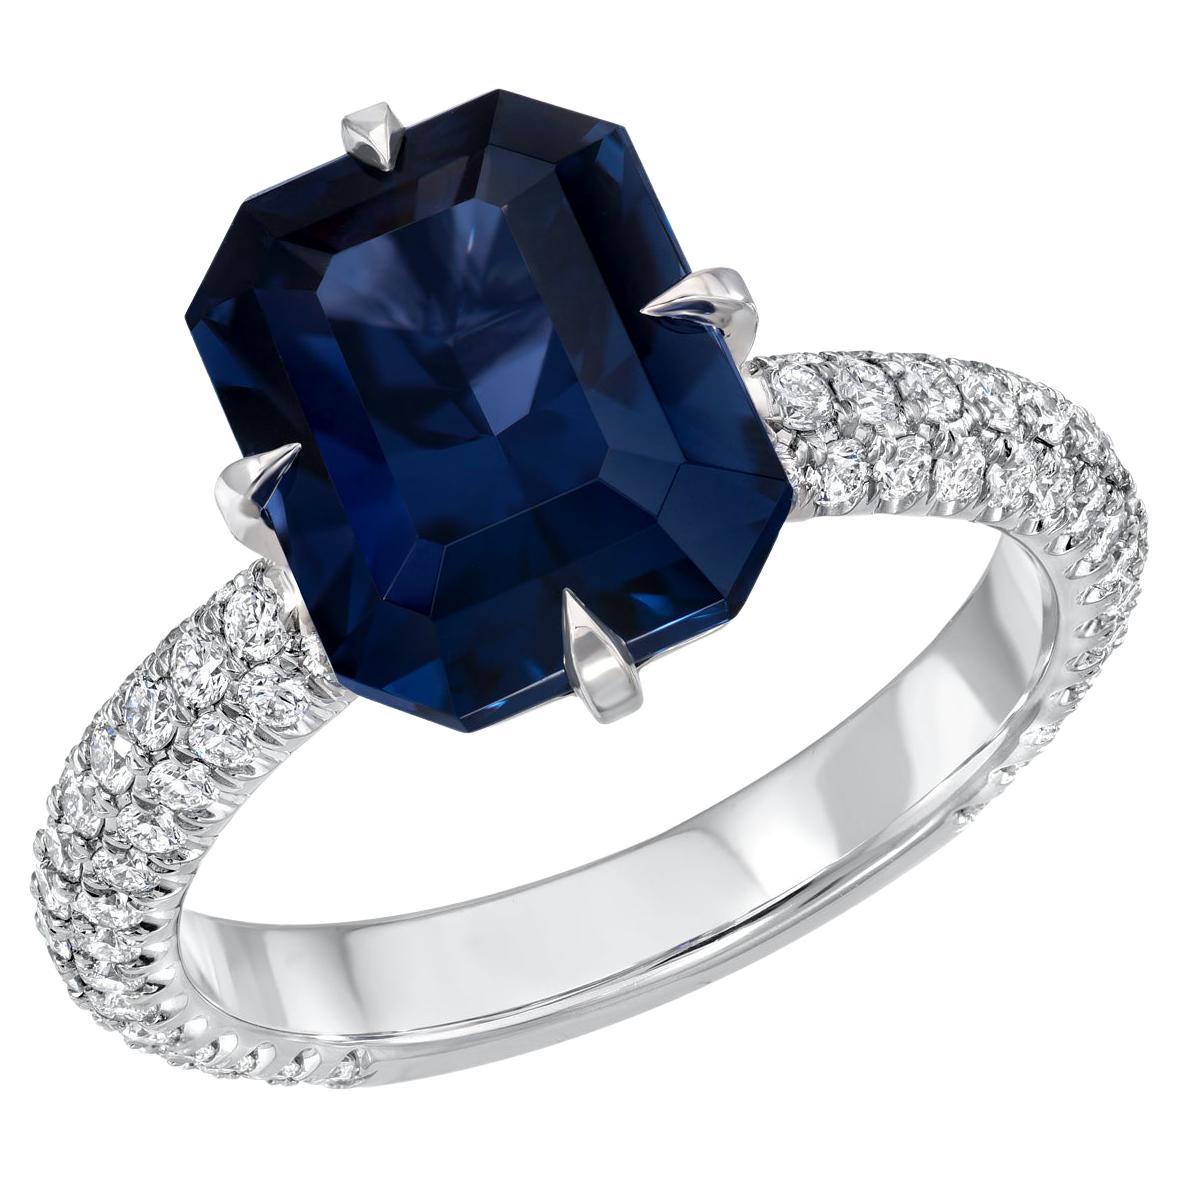 Blue Spinel Ring 4.01 Carat Emerald Cut